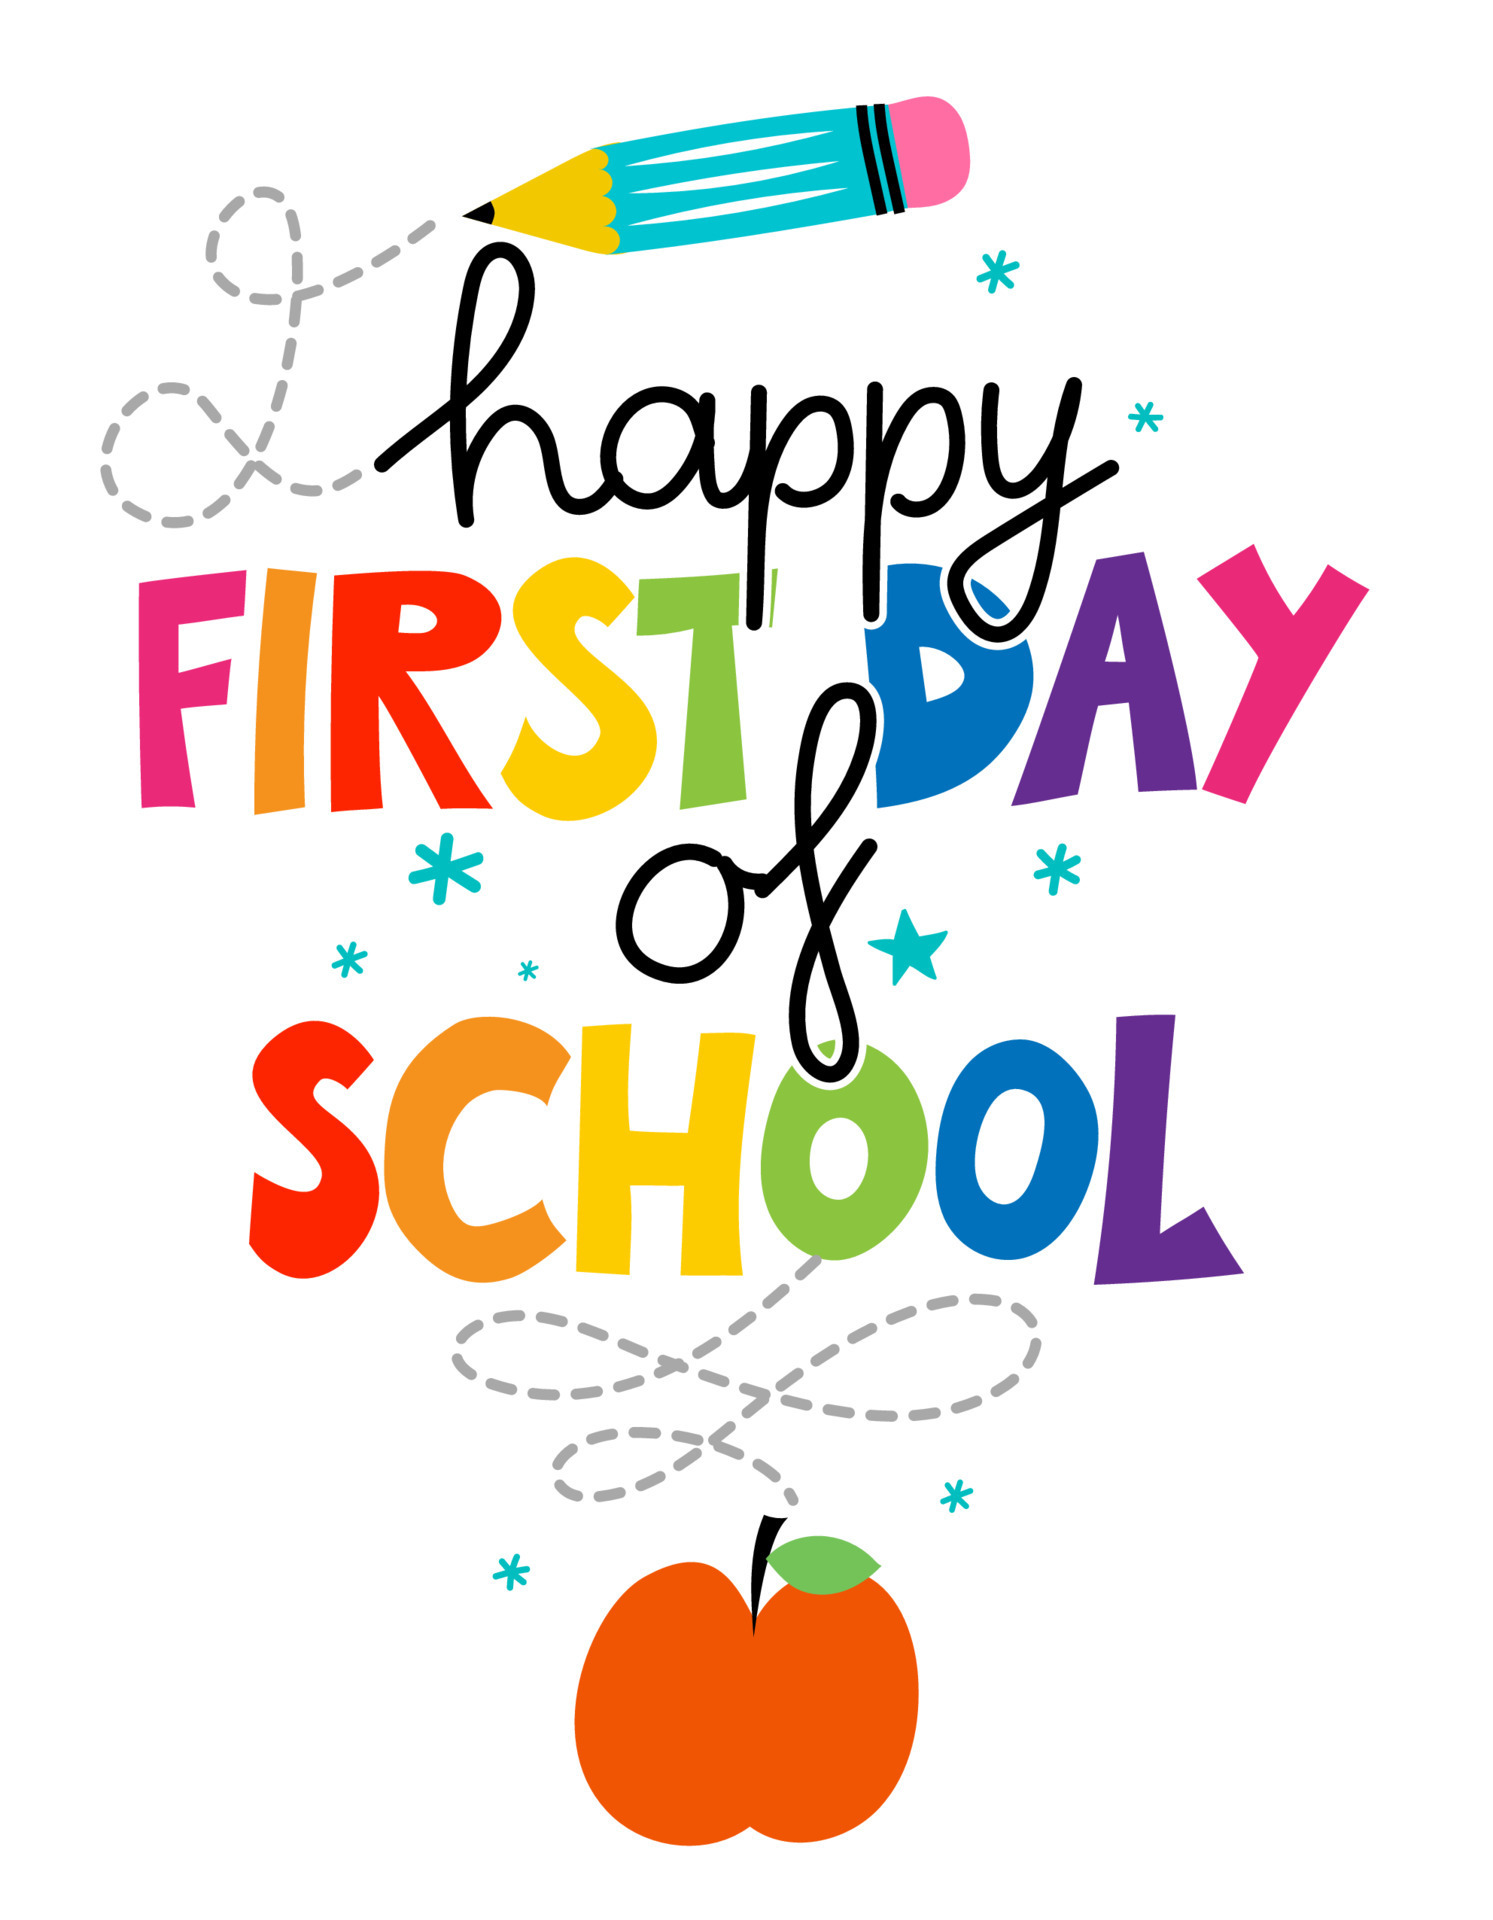 The First Day of School is Aug. 30th | St. Aloysius Gonzaga School